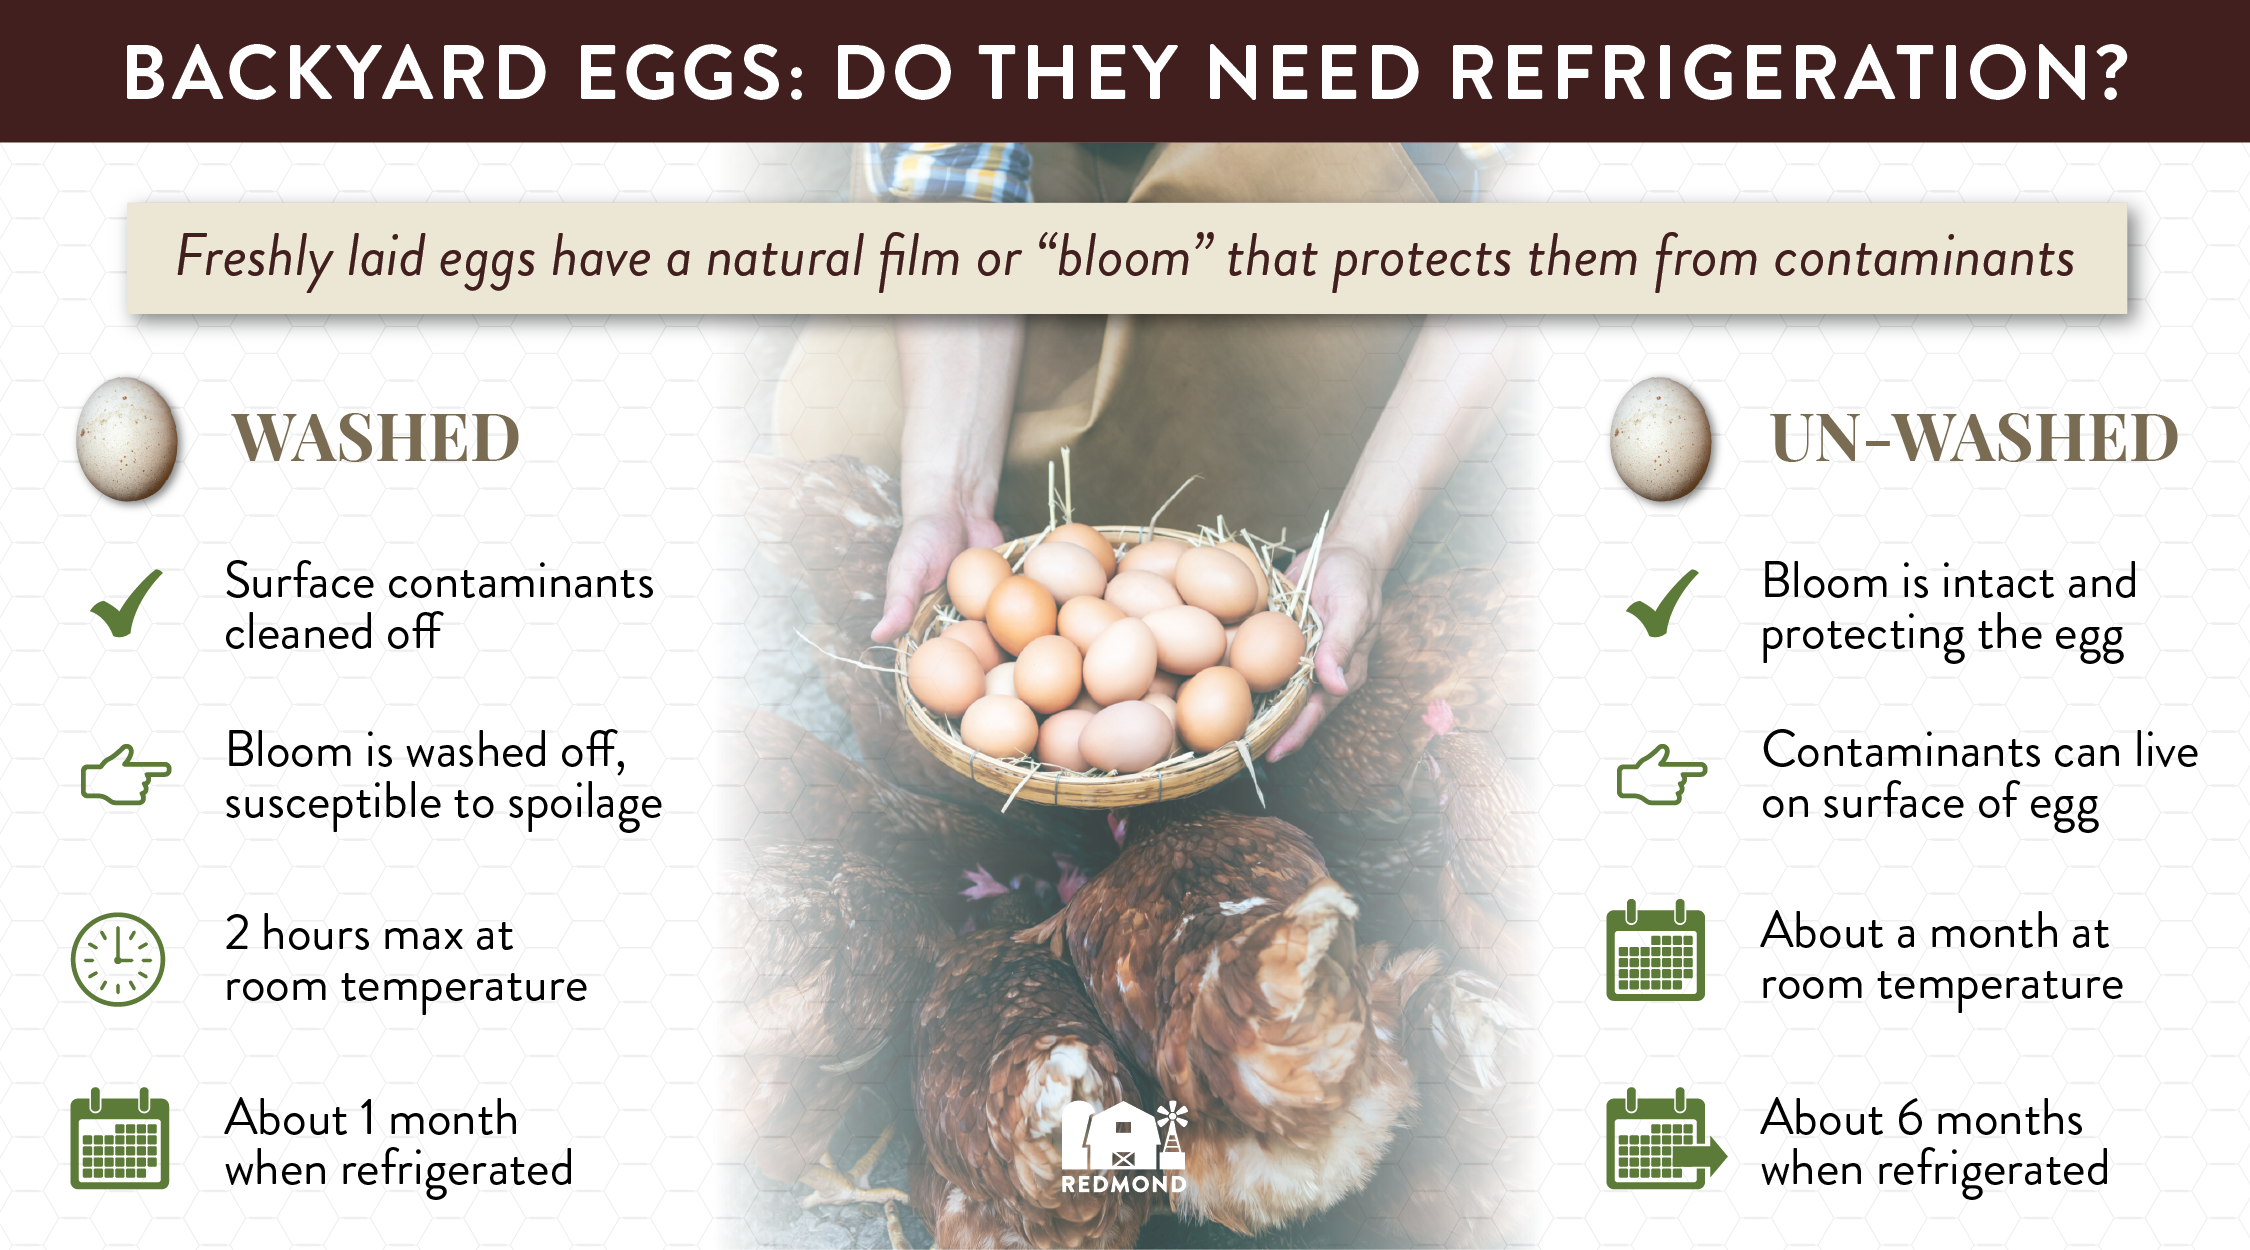 Do freshly laid eggs need refrigeration